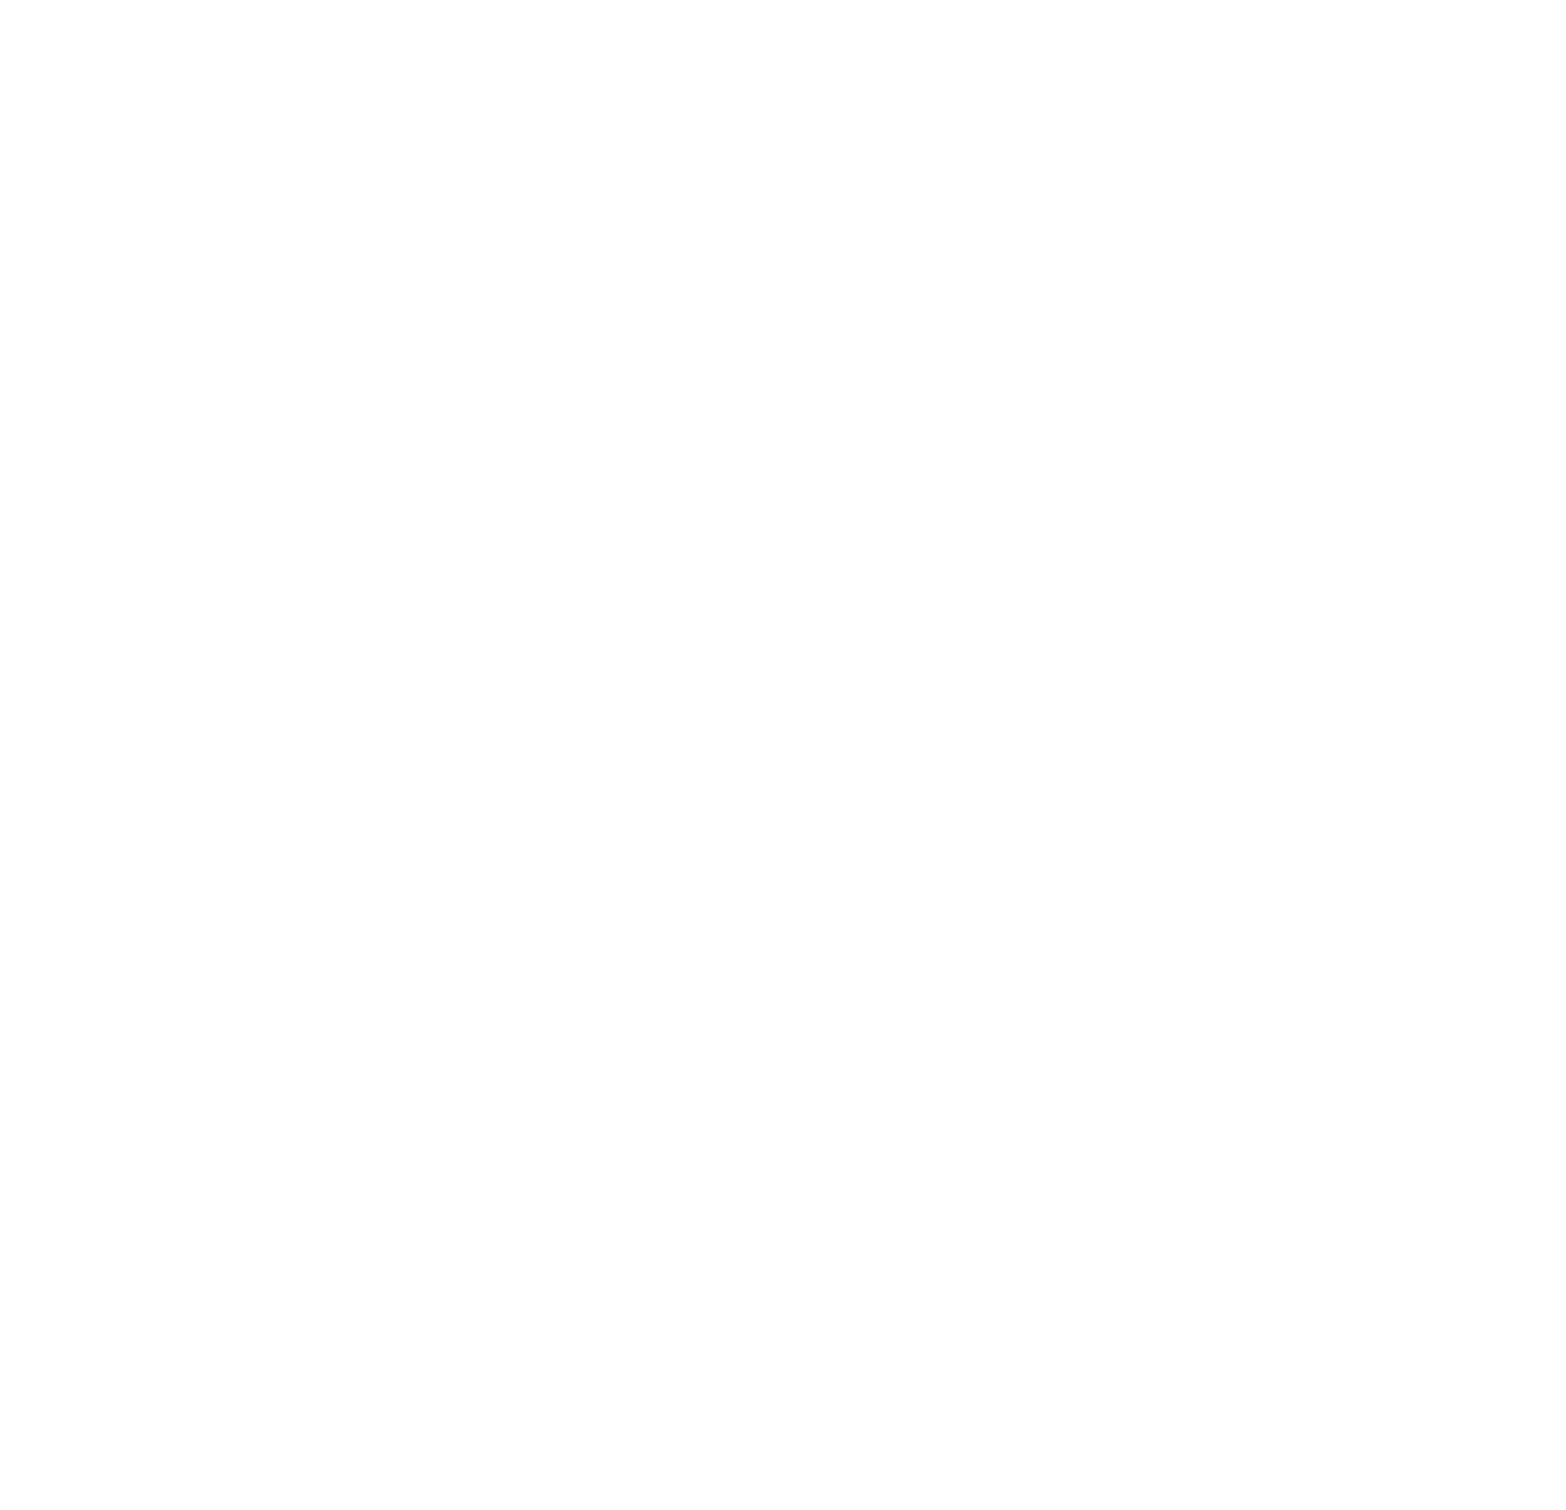 Arizona Transplant Associates